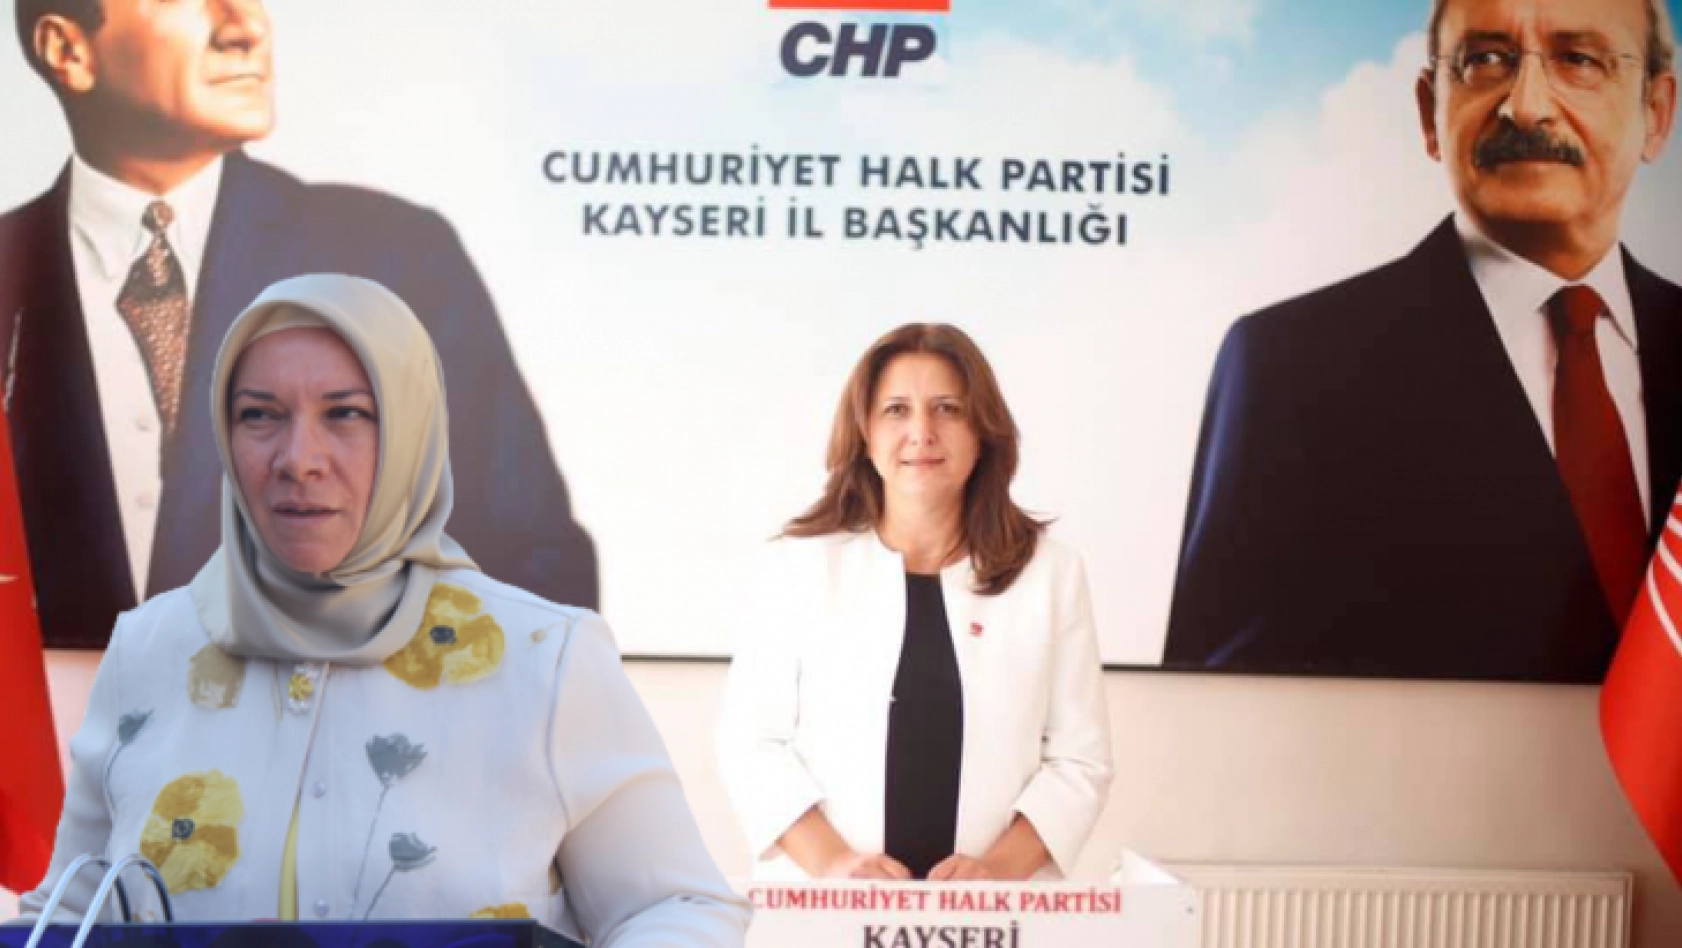 CHP İl Başkanı Özer'den, AK Parti Milletvekili Nergis'e: Artık yeter! Dur artık…